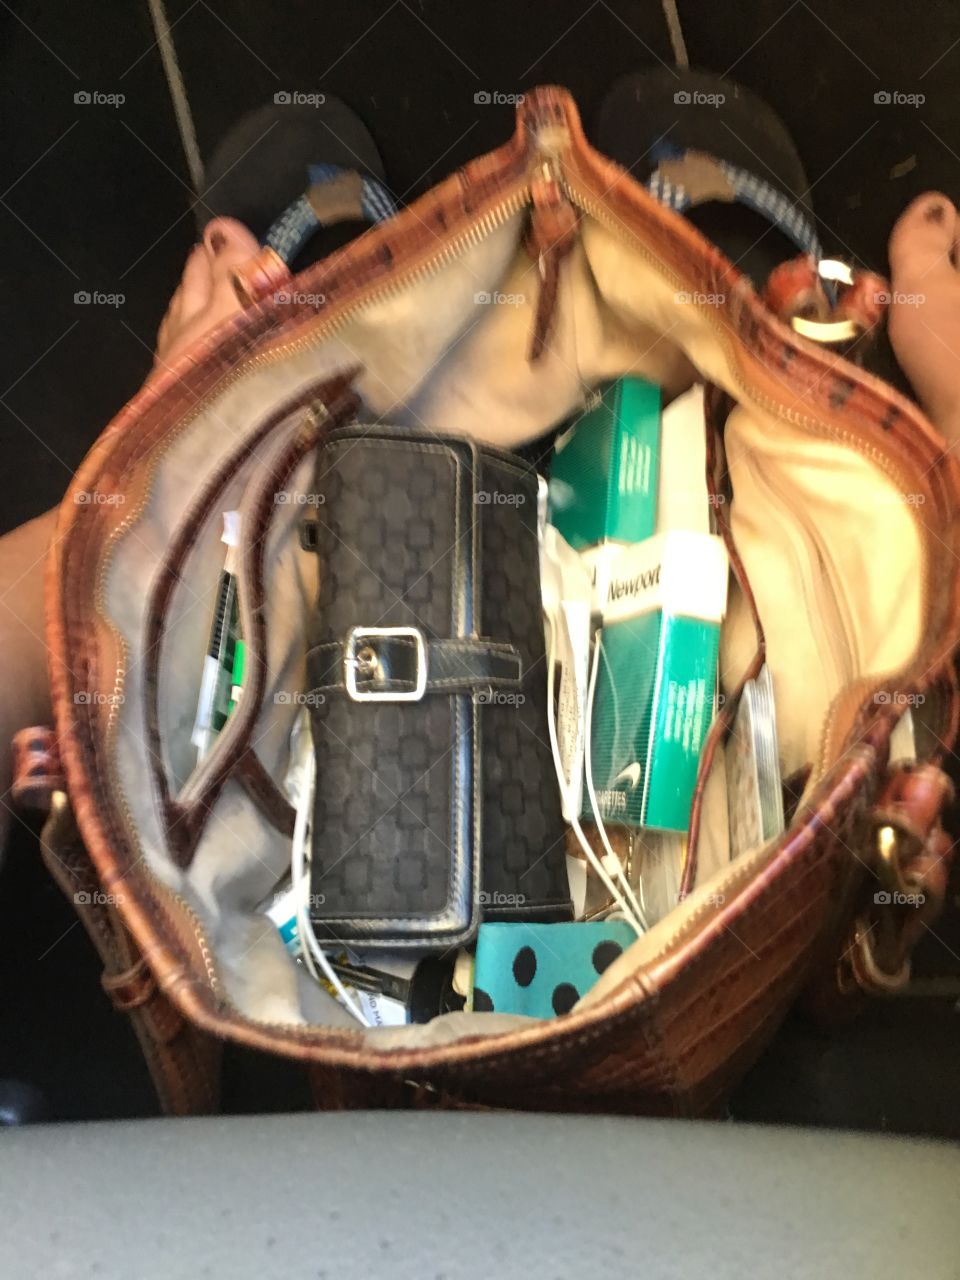 Inside the purse